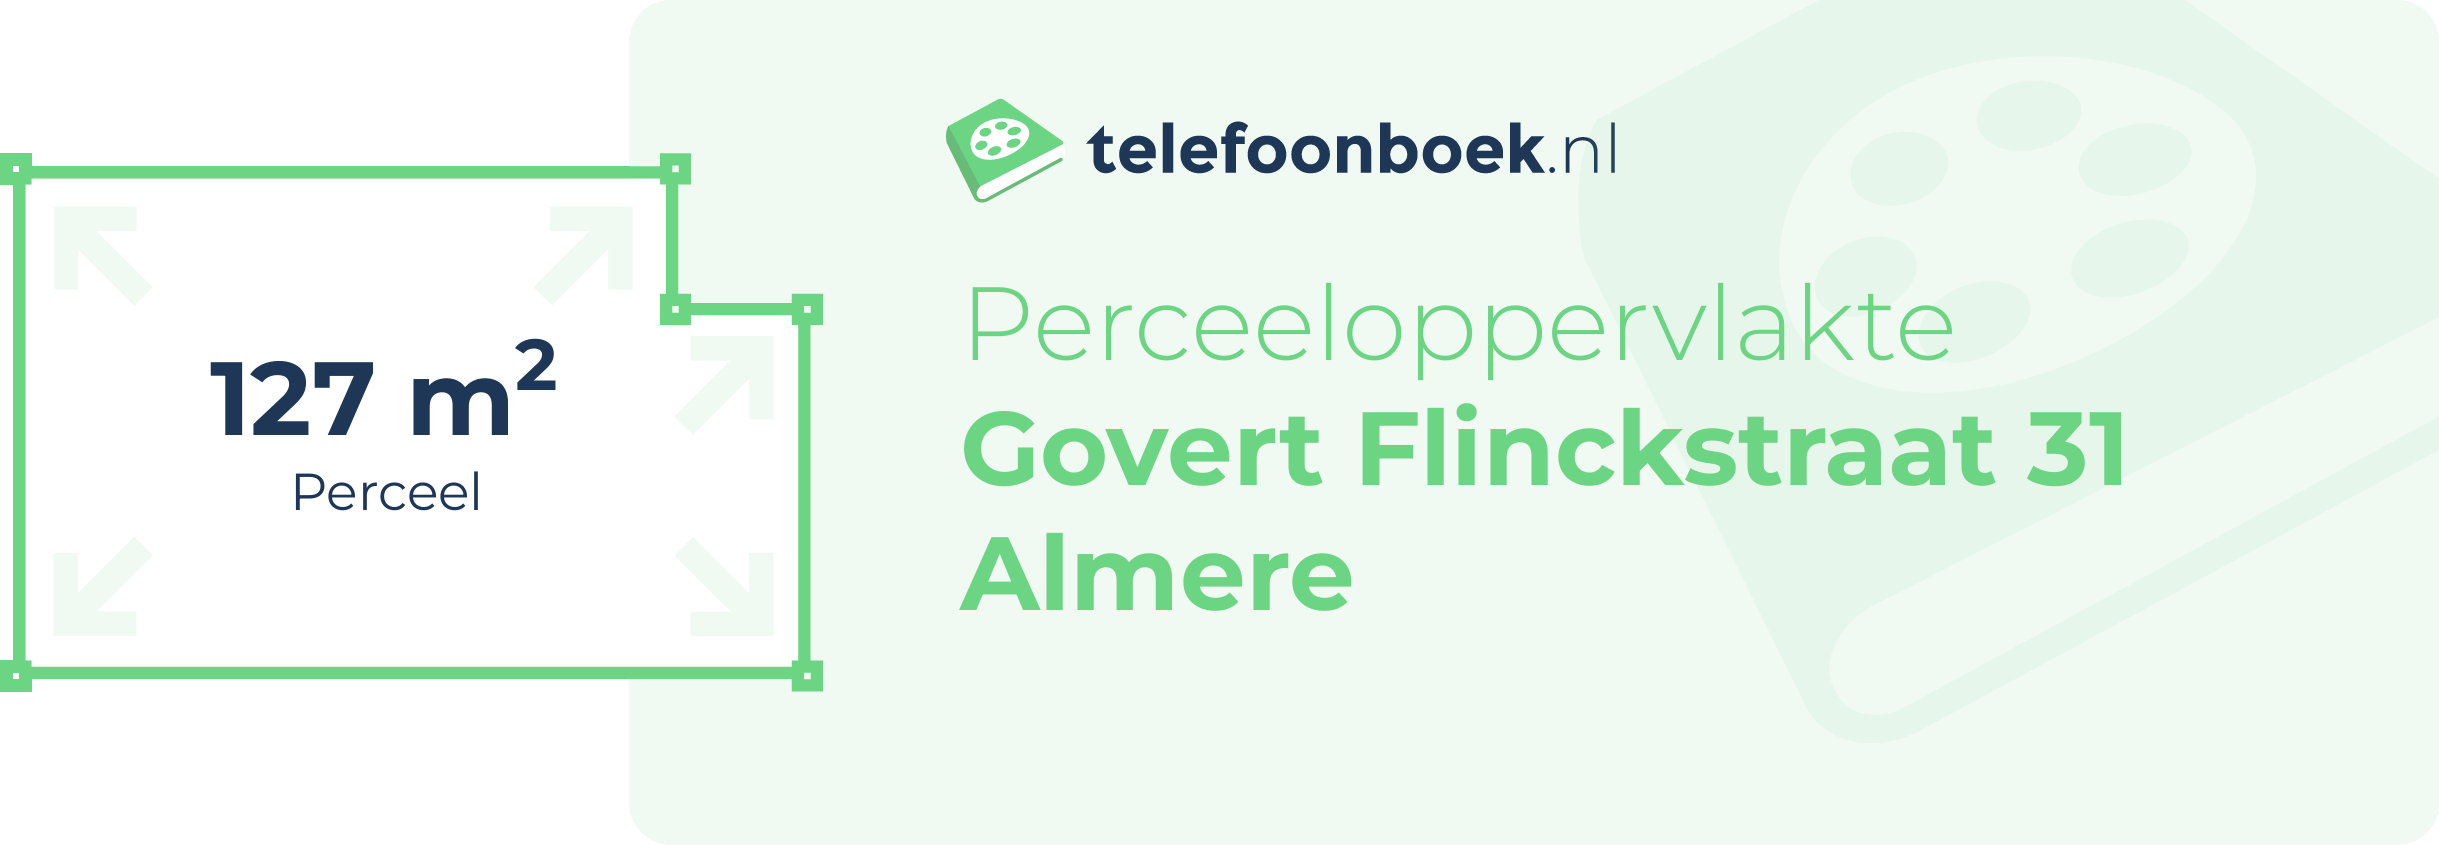 Perceeloppervlakte Govert Flinckstraat 31 Almere